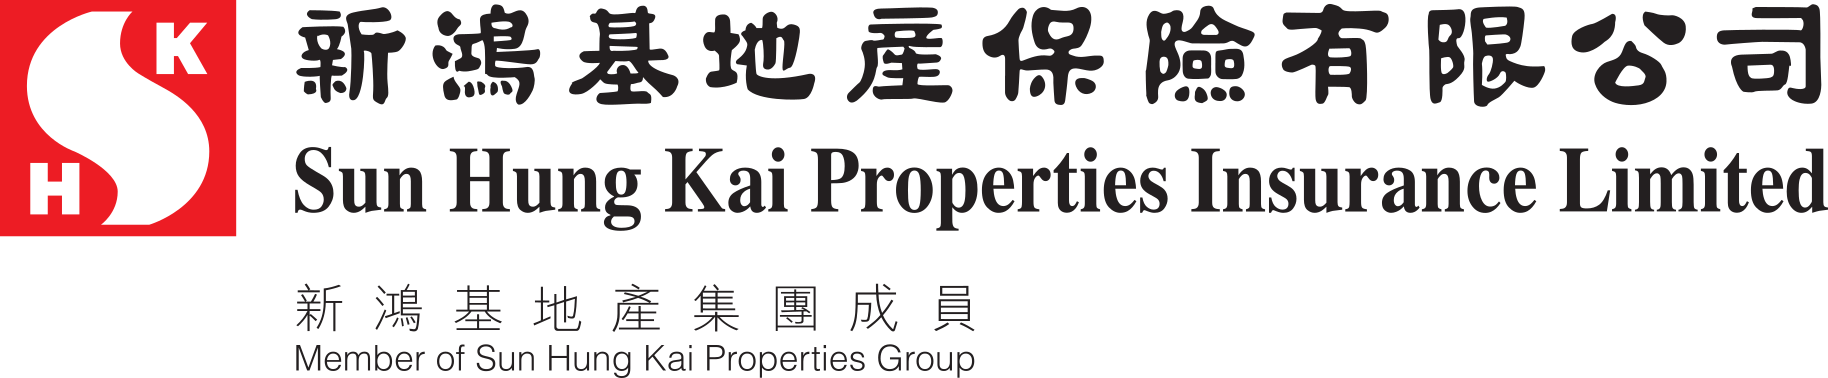 Sun Hung Kai Properties Insurance Limited